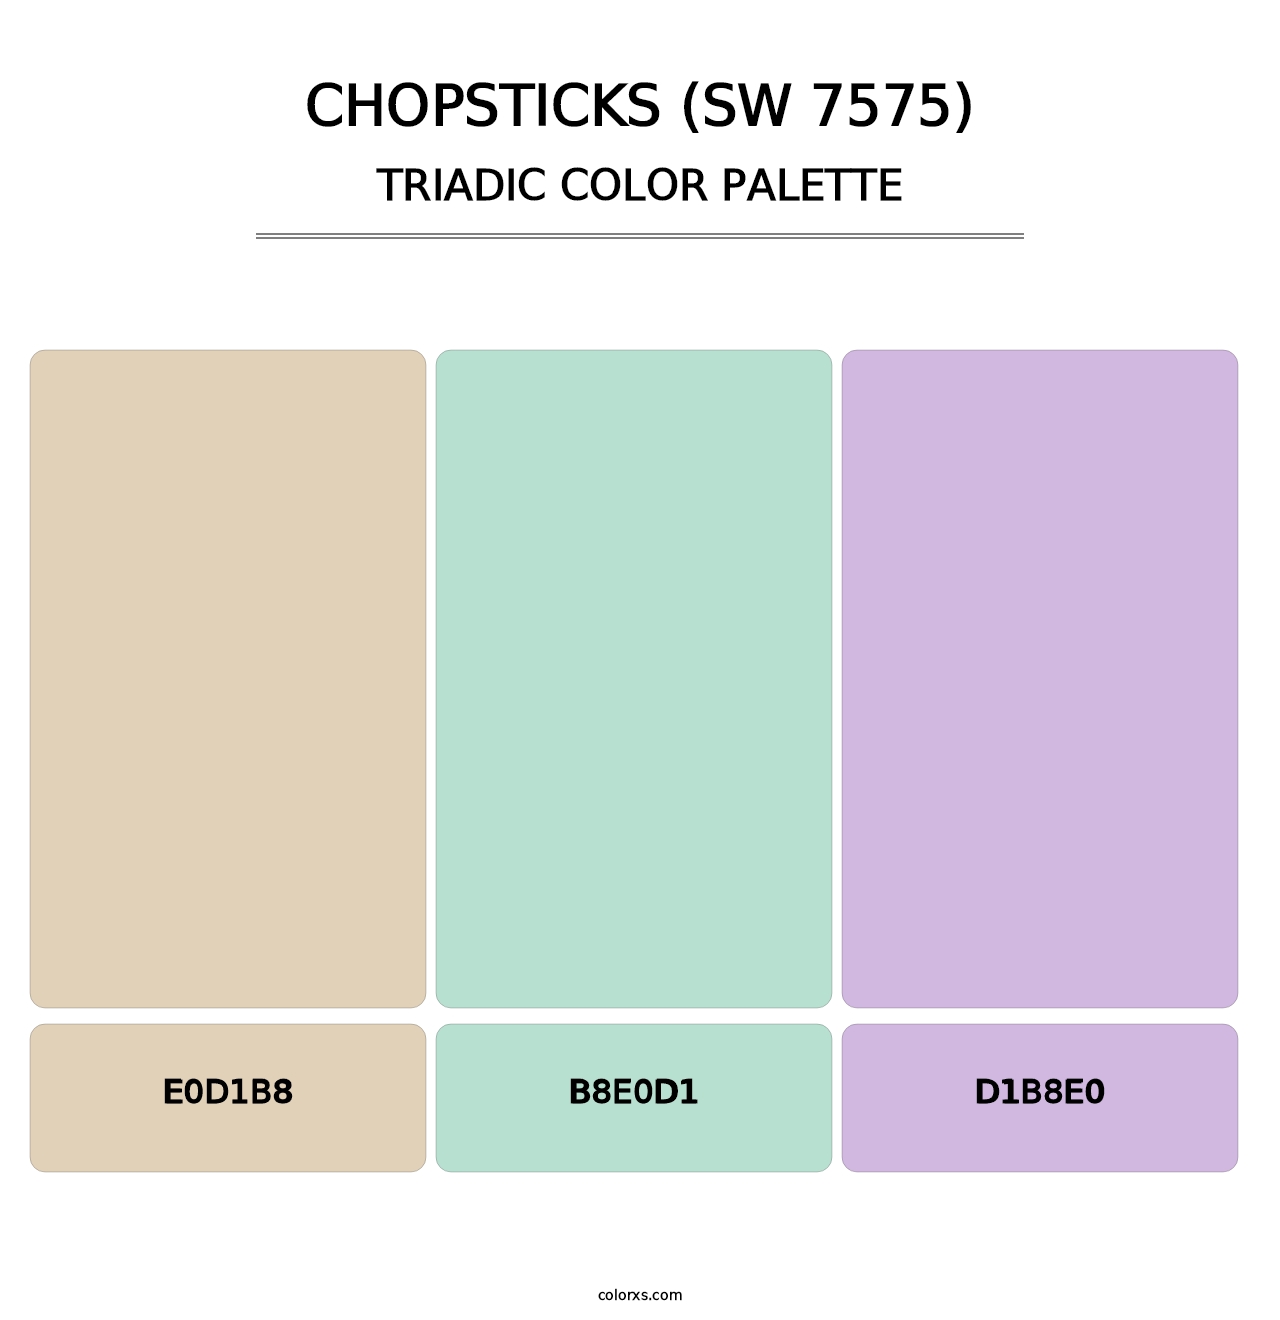 Chopsticks (SW 7575) - Triadic Color Palette